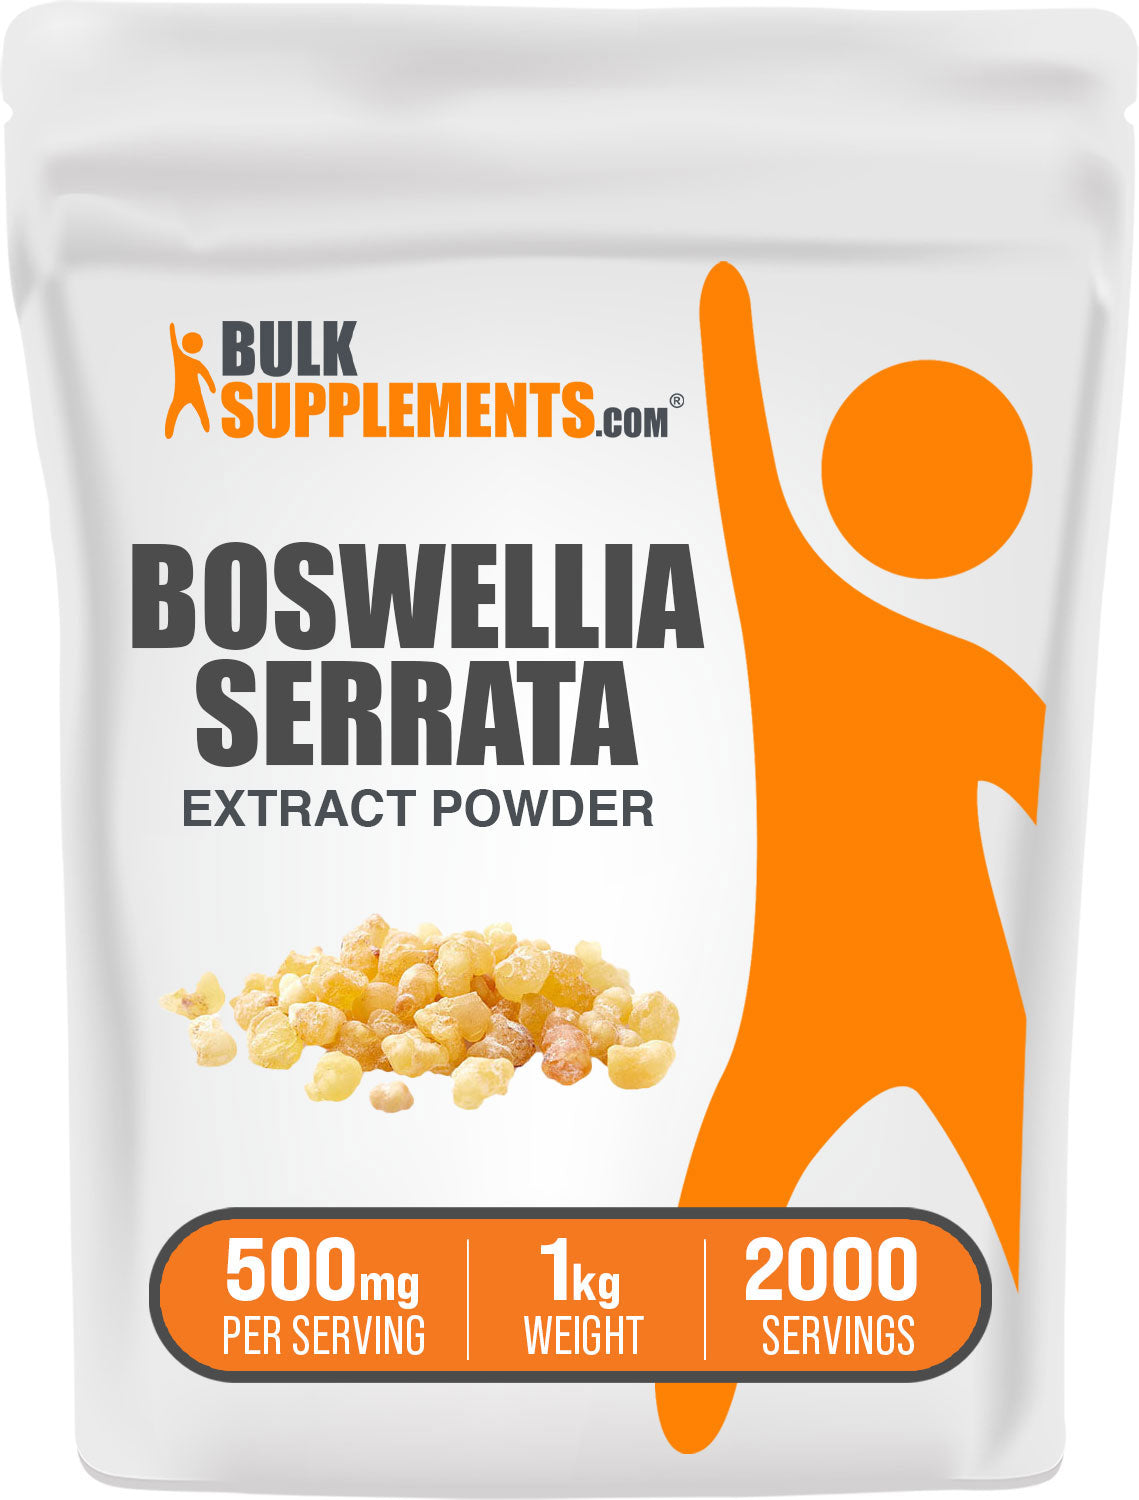 Boswellia Serrata Extract Powder 1kg Bag